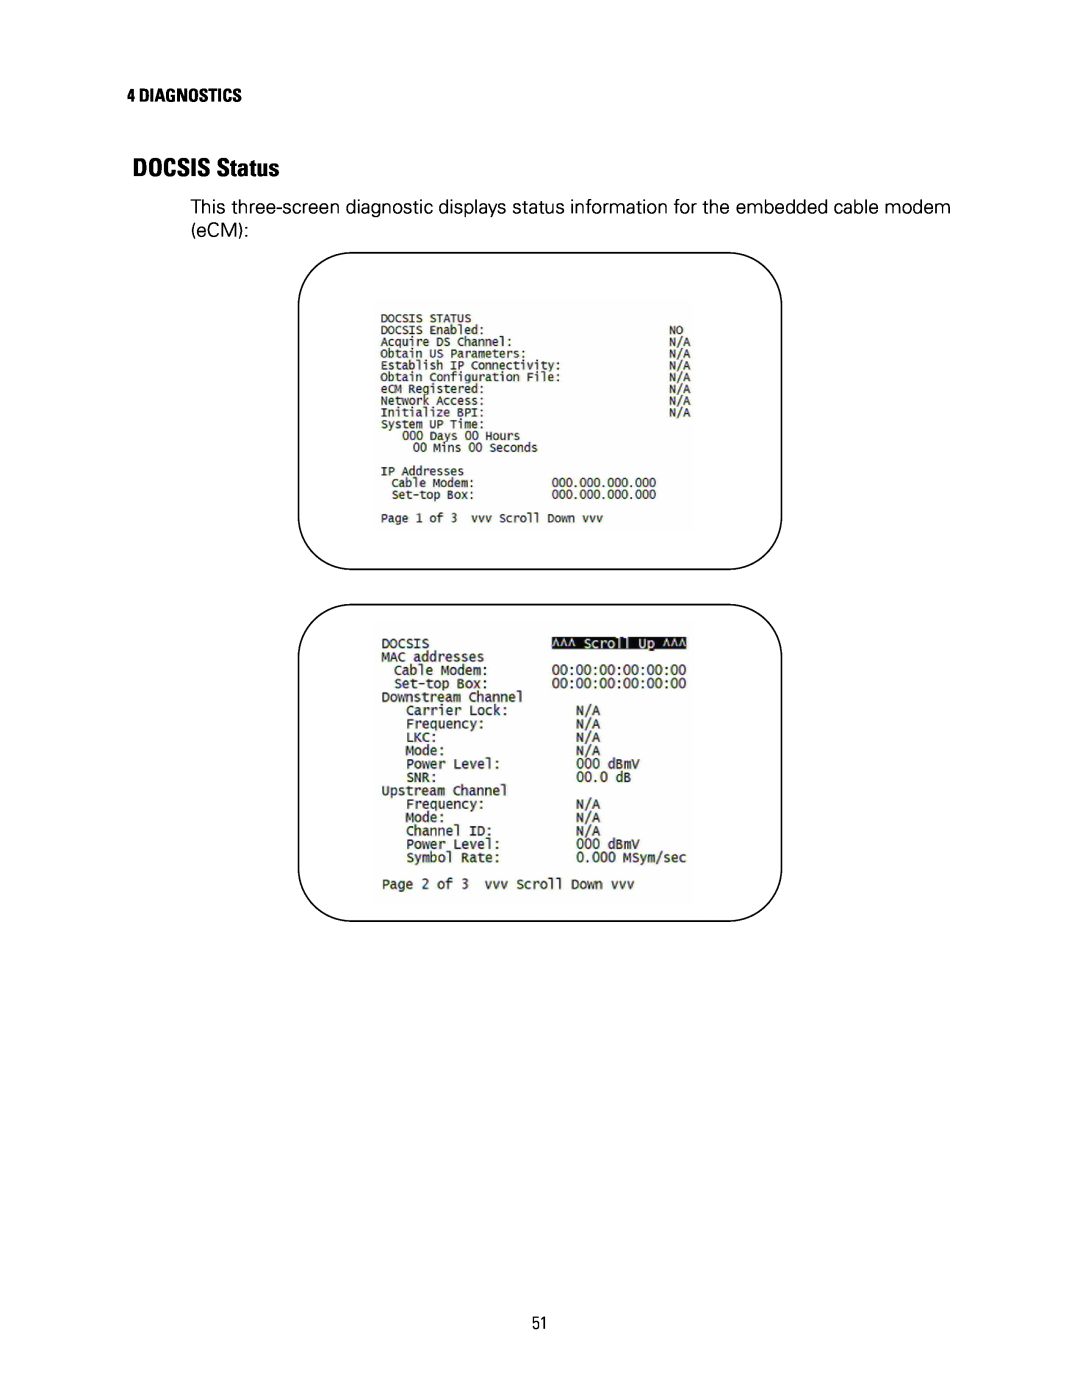 Motorola DCH3200 installation manual DOCSIS Status, Diagnostics 